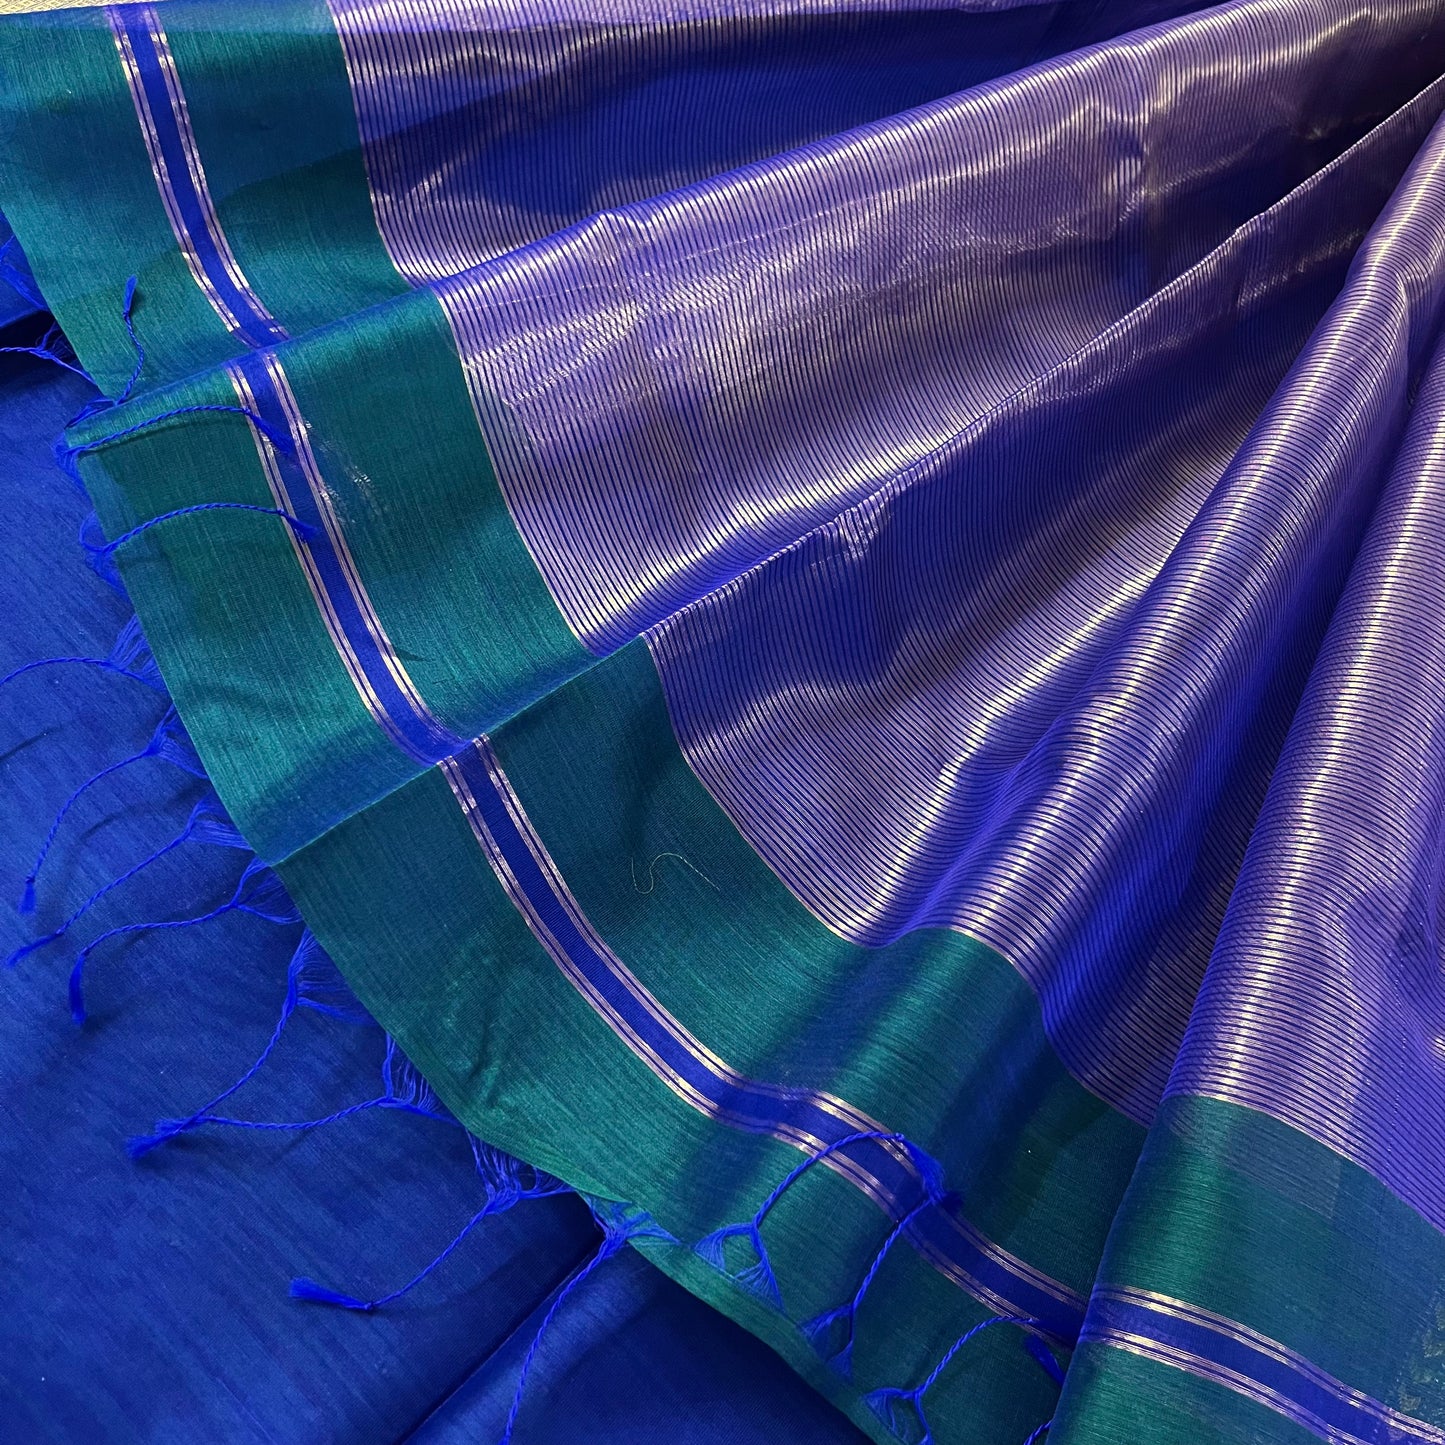 Peacock green & blue dual tone maheshwari saree with flower motifs all over